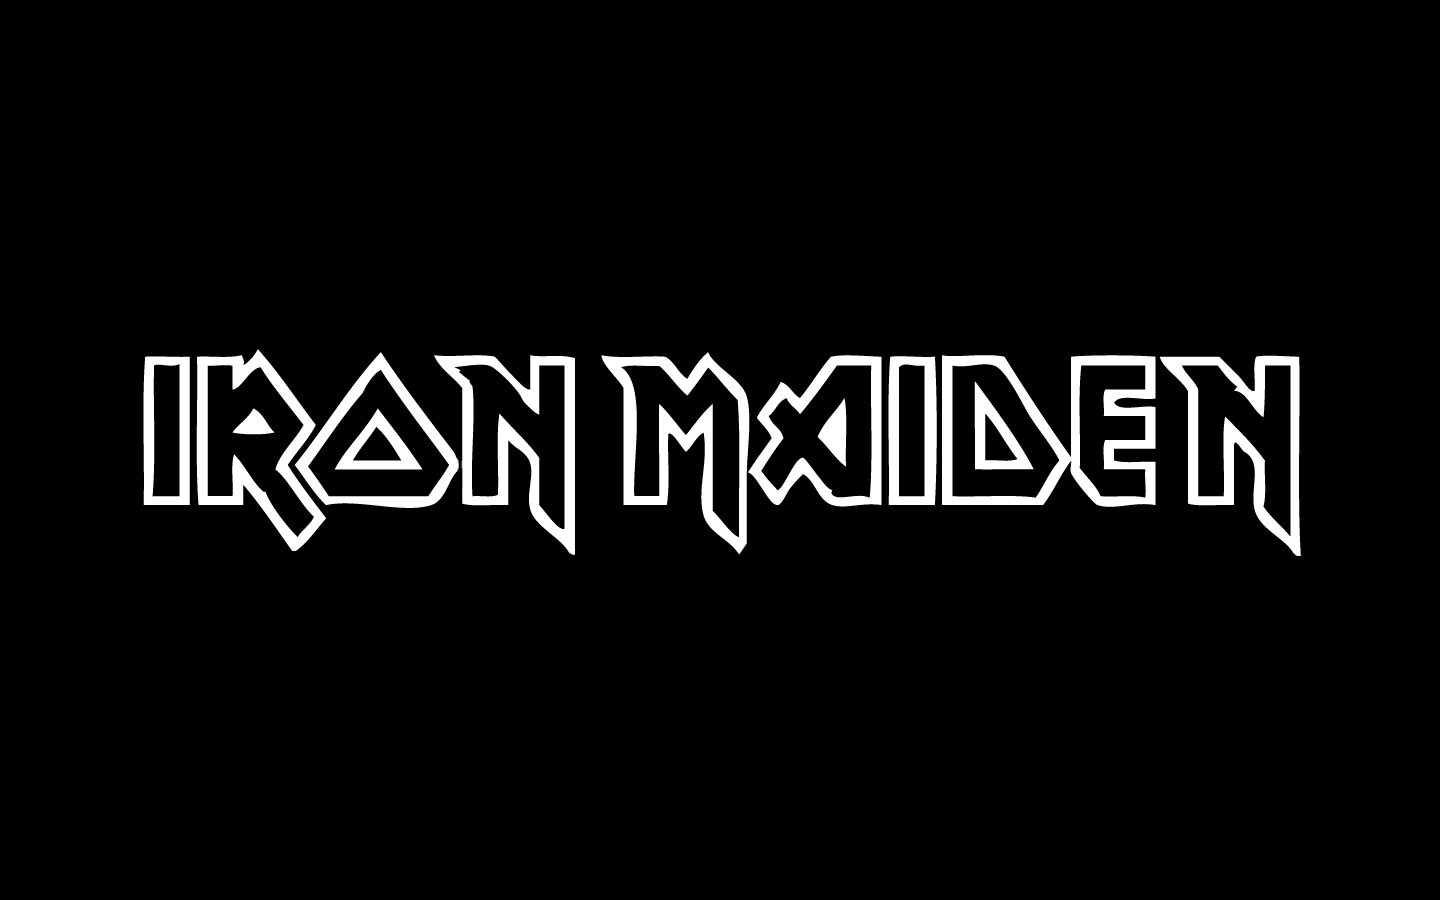 Iron Maiden Vector Wallpaper by LynchMob10-09 on DeviantArt